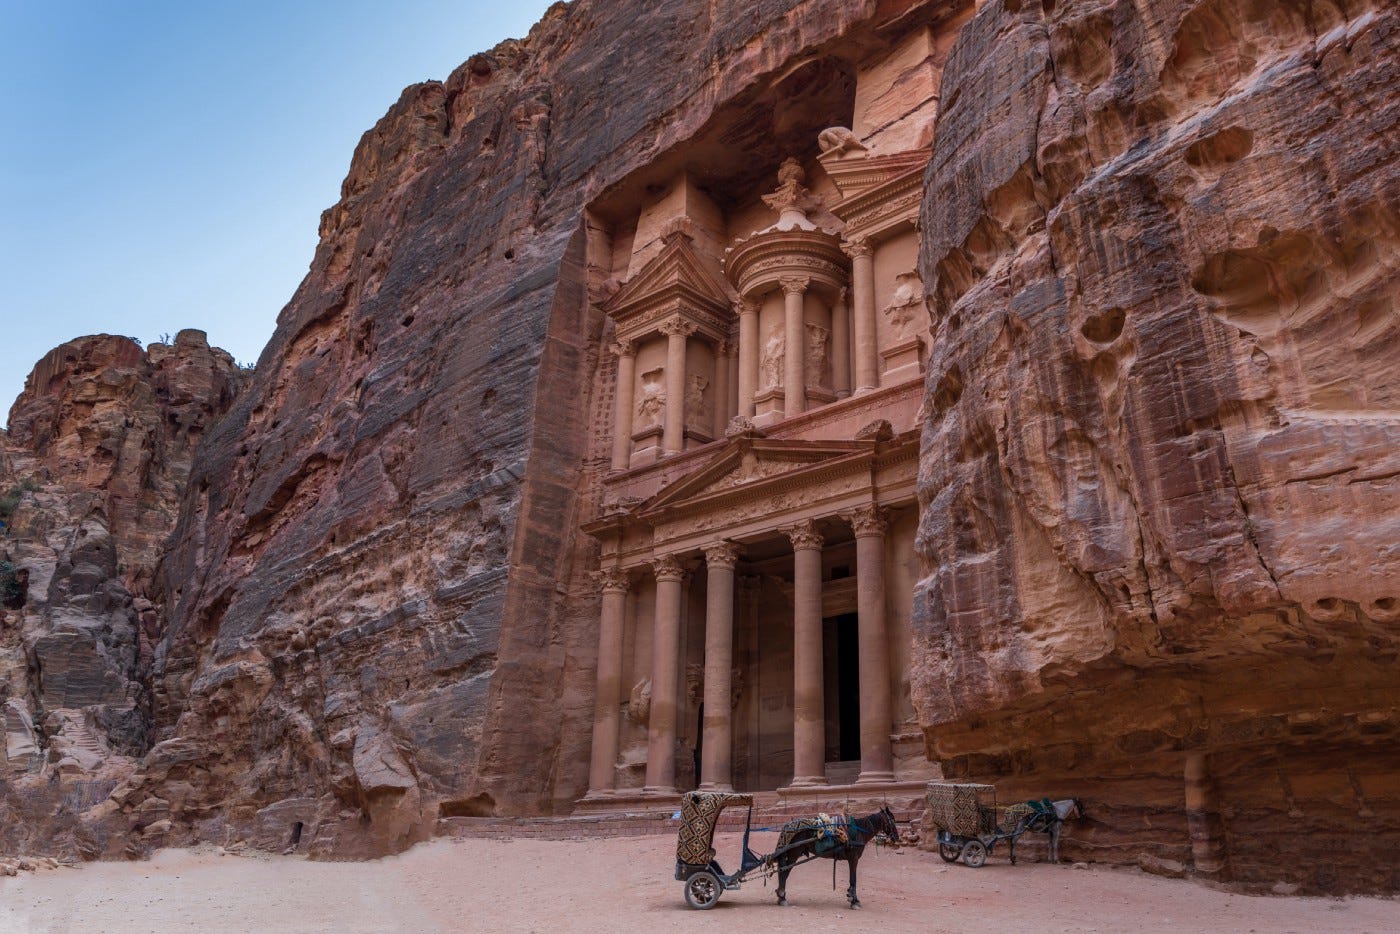 Temple carved into rock in Jordan